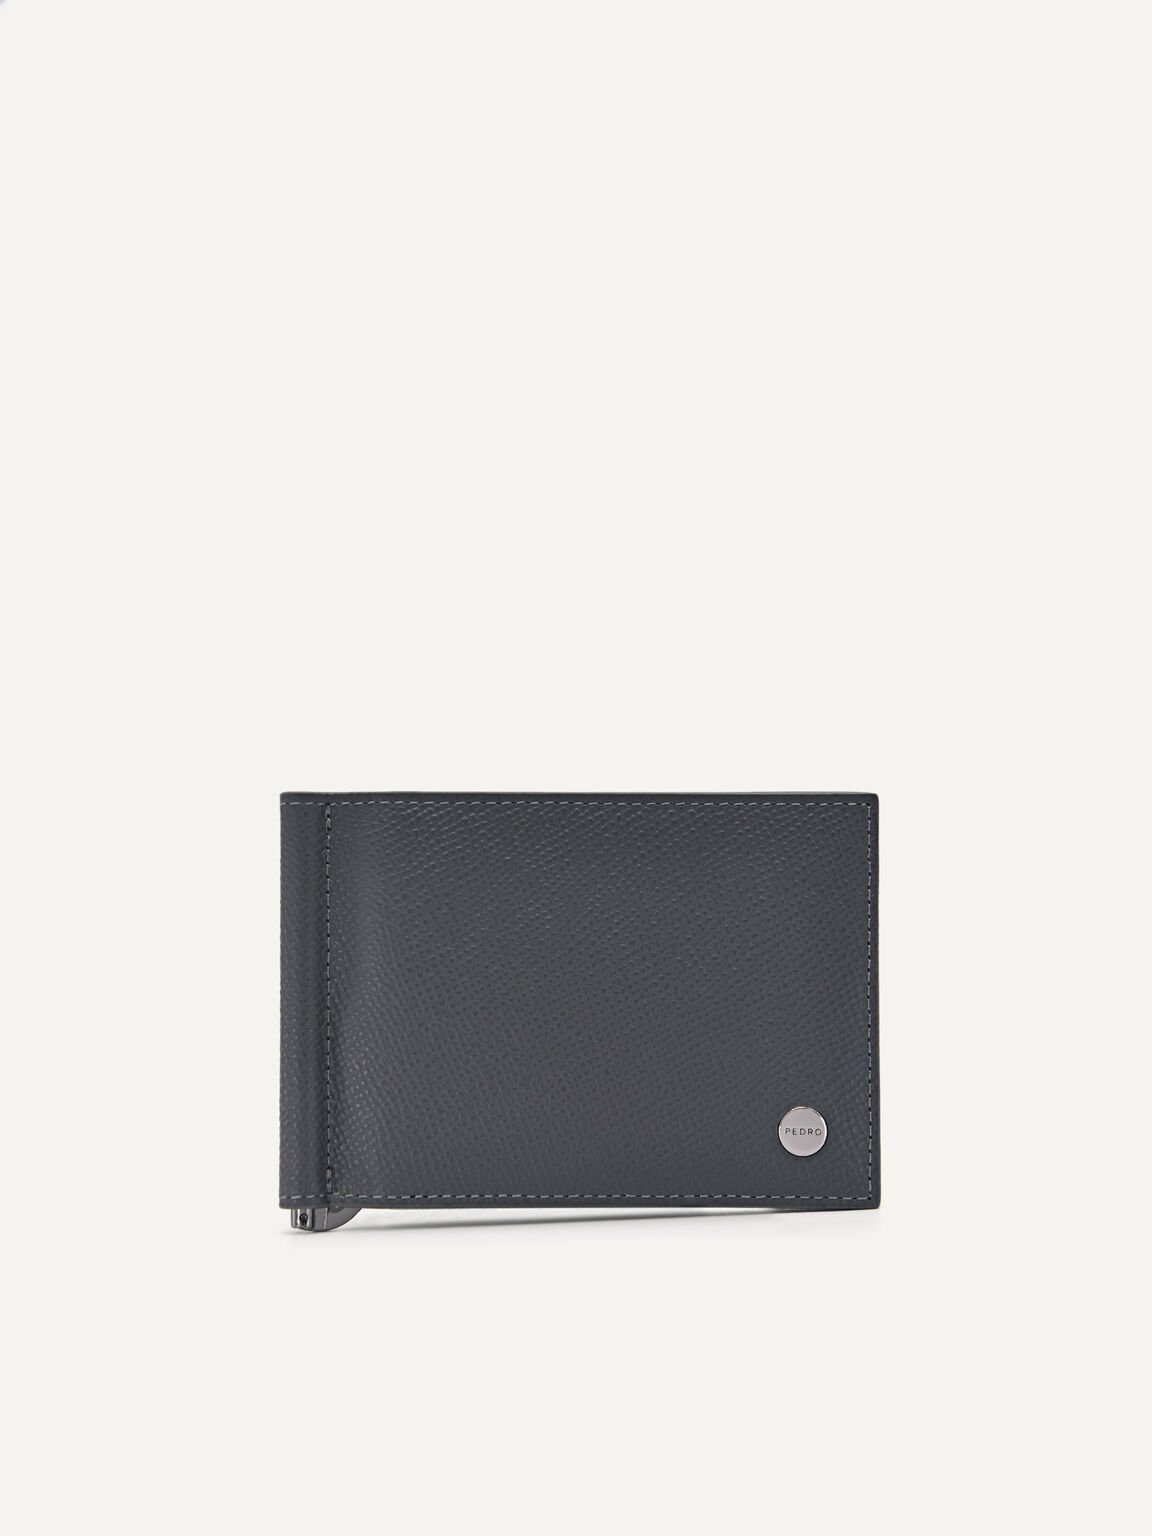 Leather Bi-Fold Card Holder with Money Clip, Dark Grey